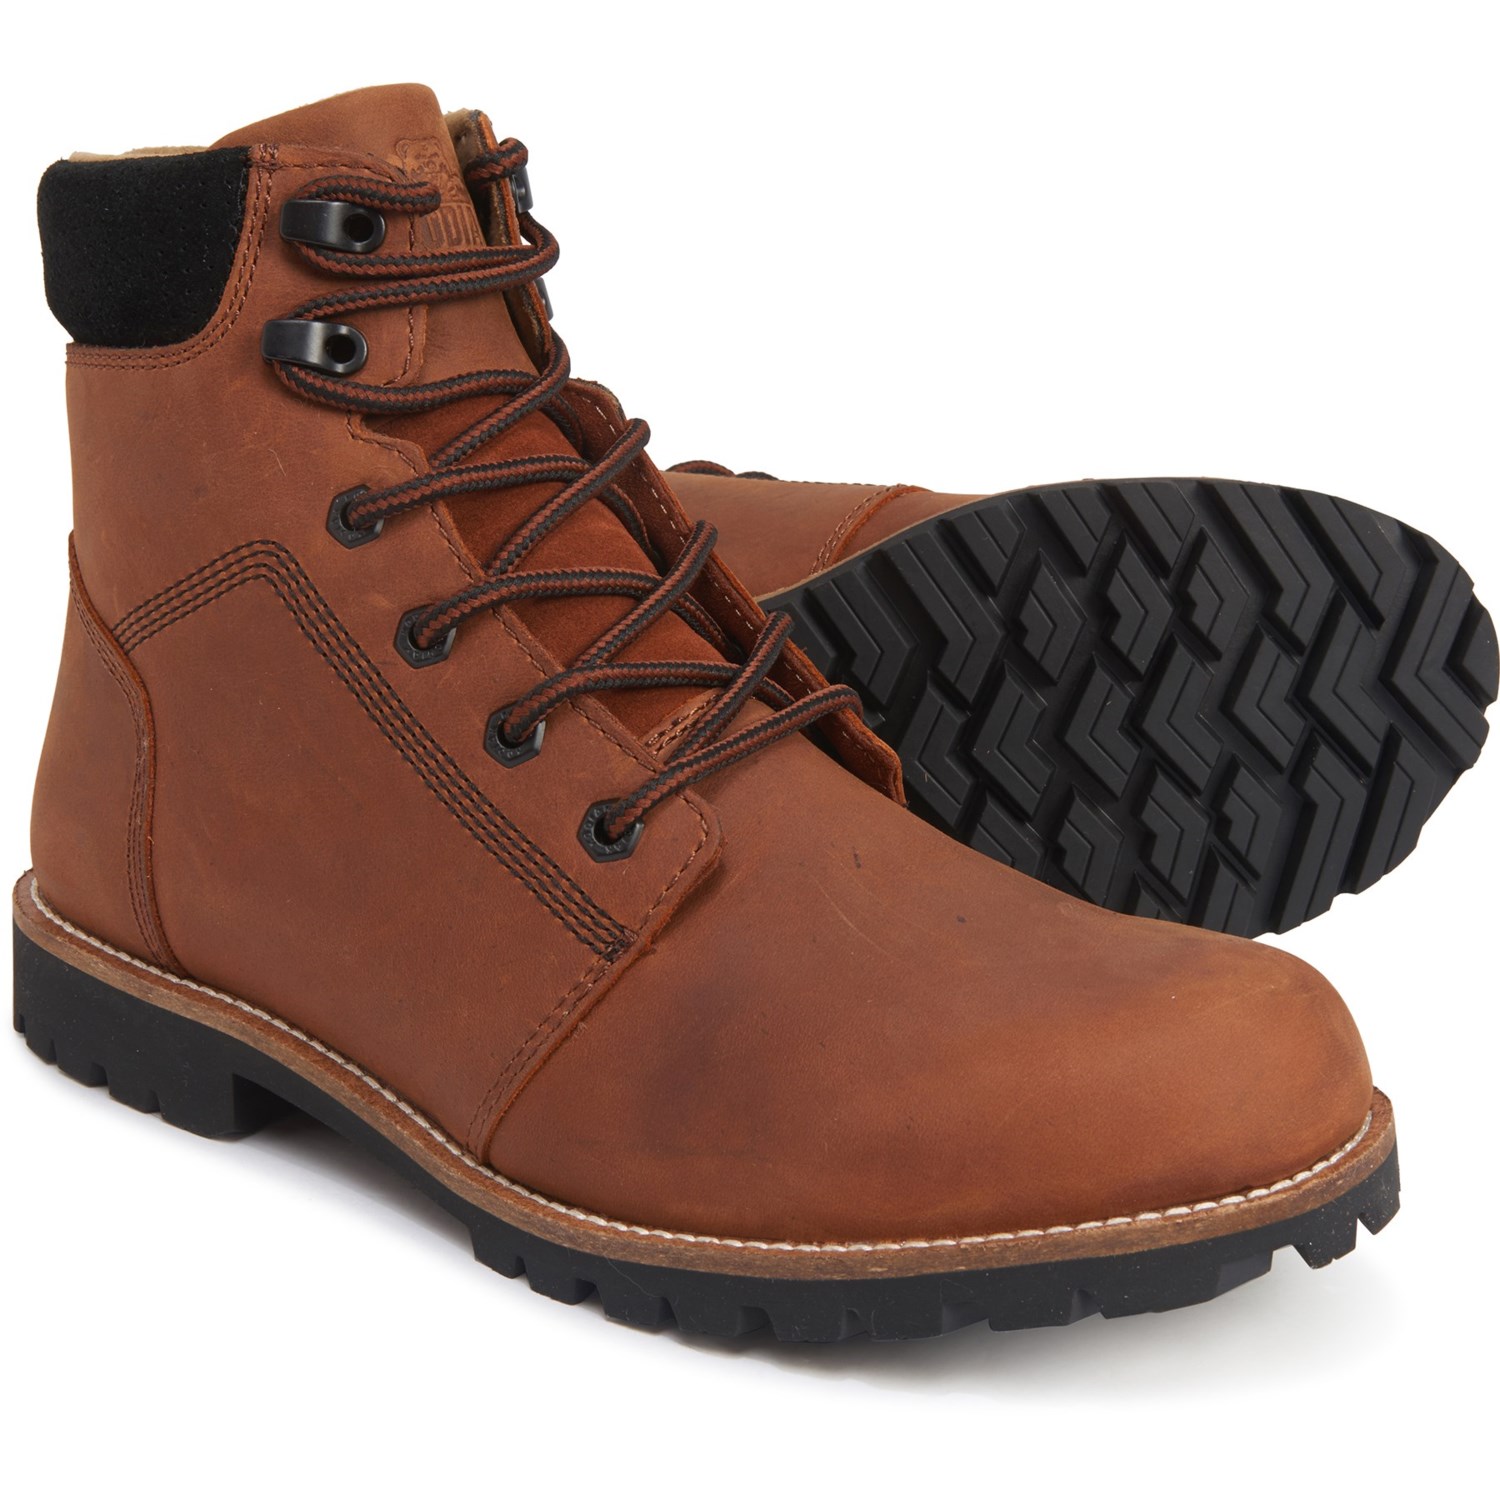 Kodiak Thompson 6” Boots (For Men) - Save 52%